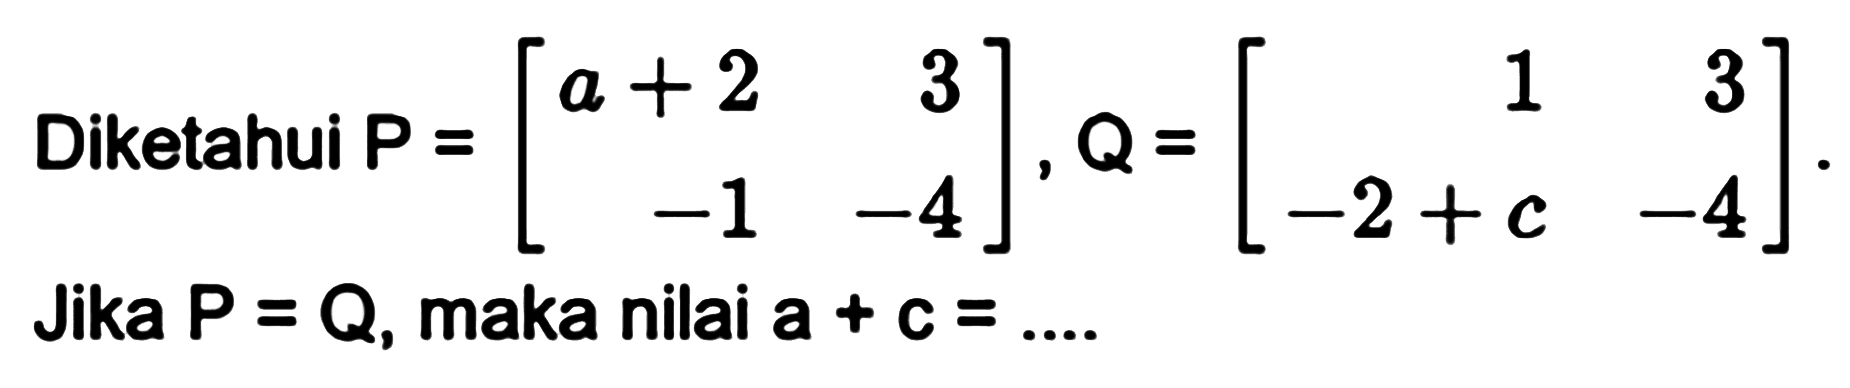 Diketahui P=[a+2 3 -1 -4], Q=[1 3 -2+c -4]. Jika P=Q, maka nilai a+c=...